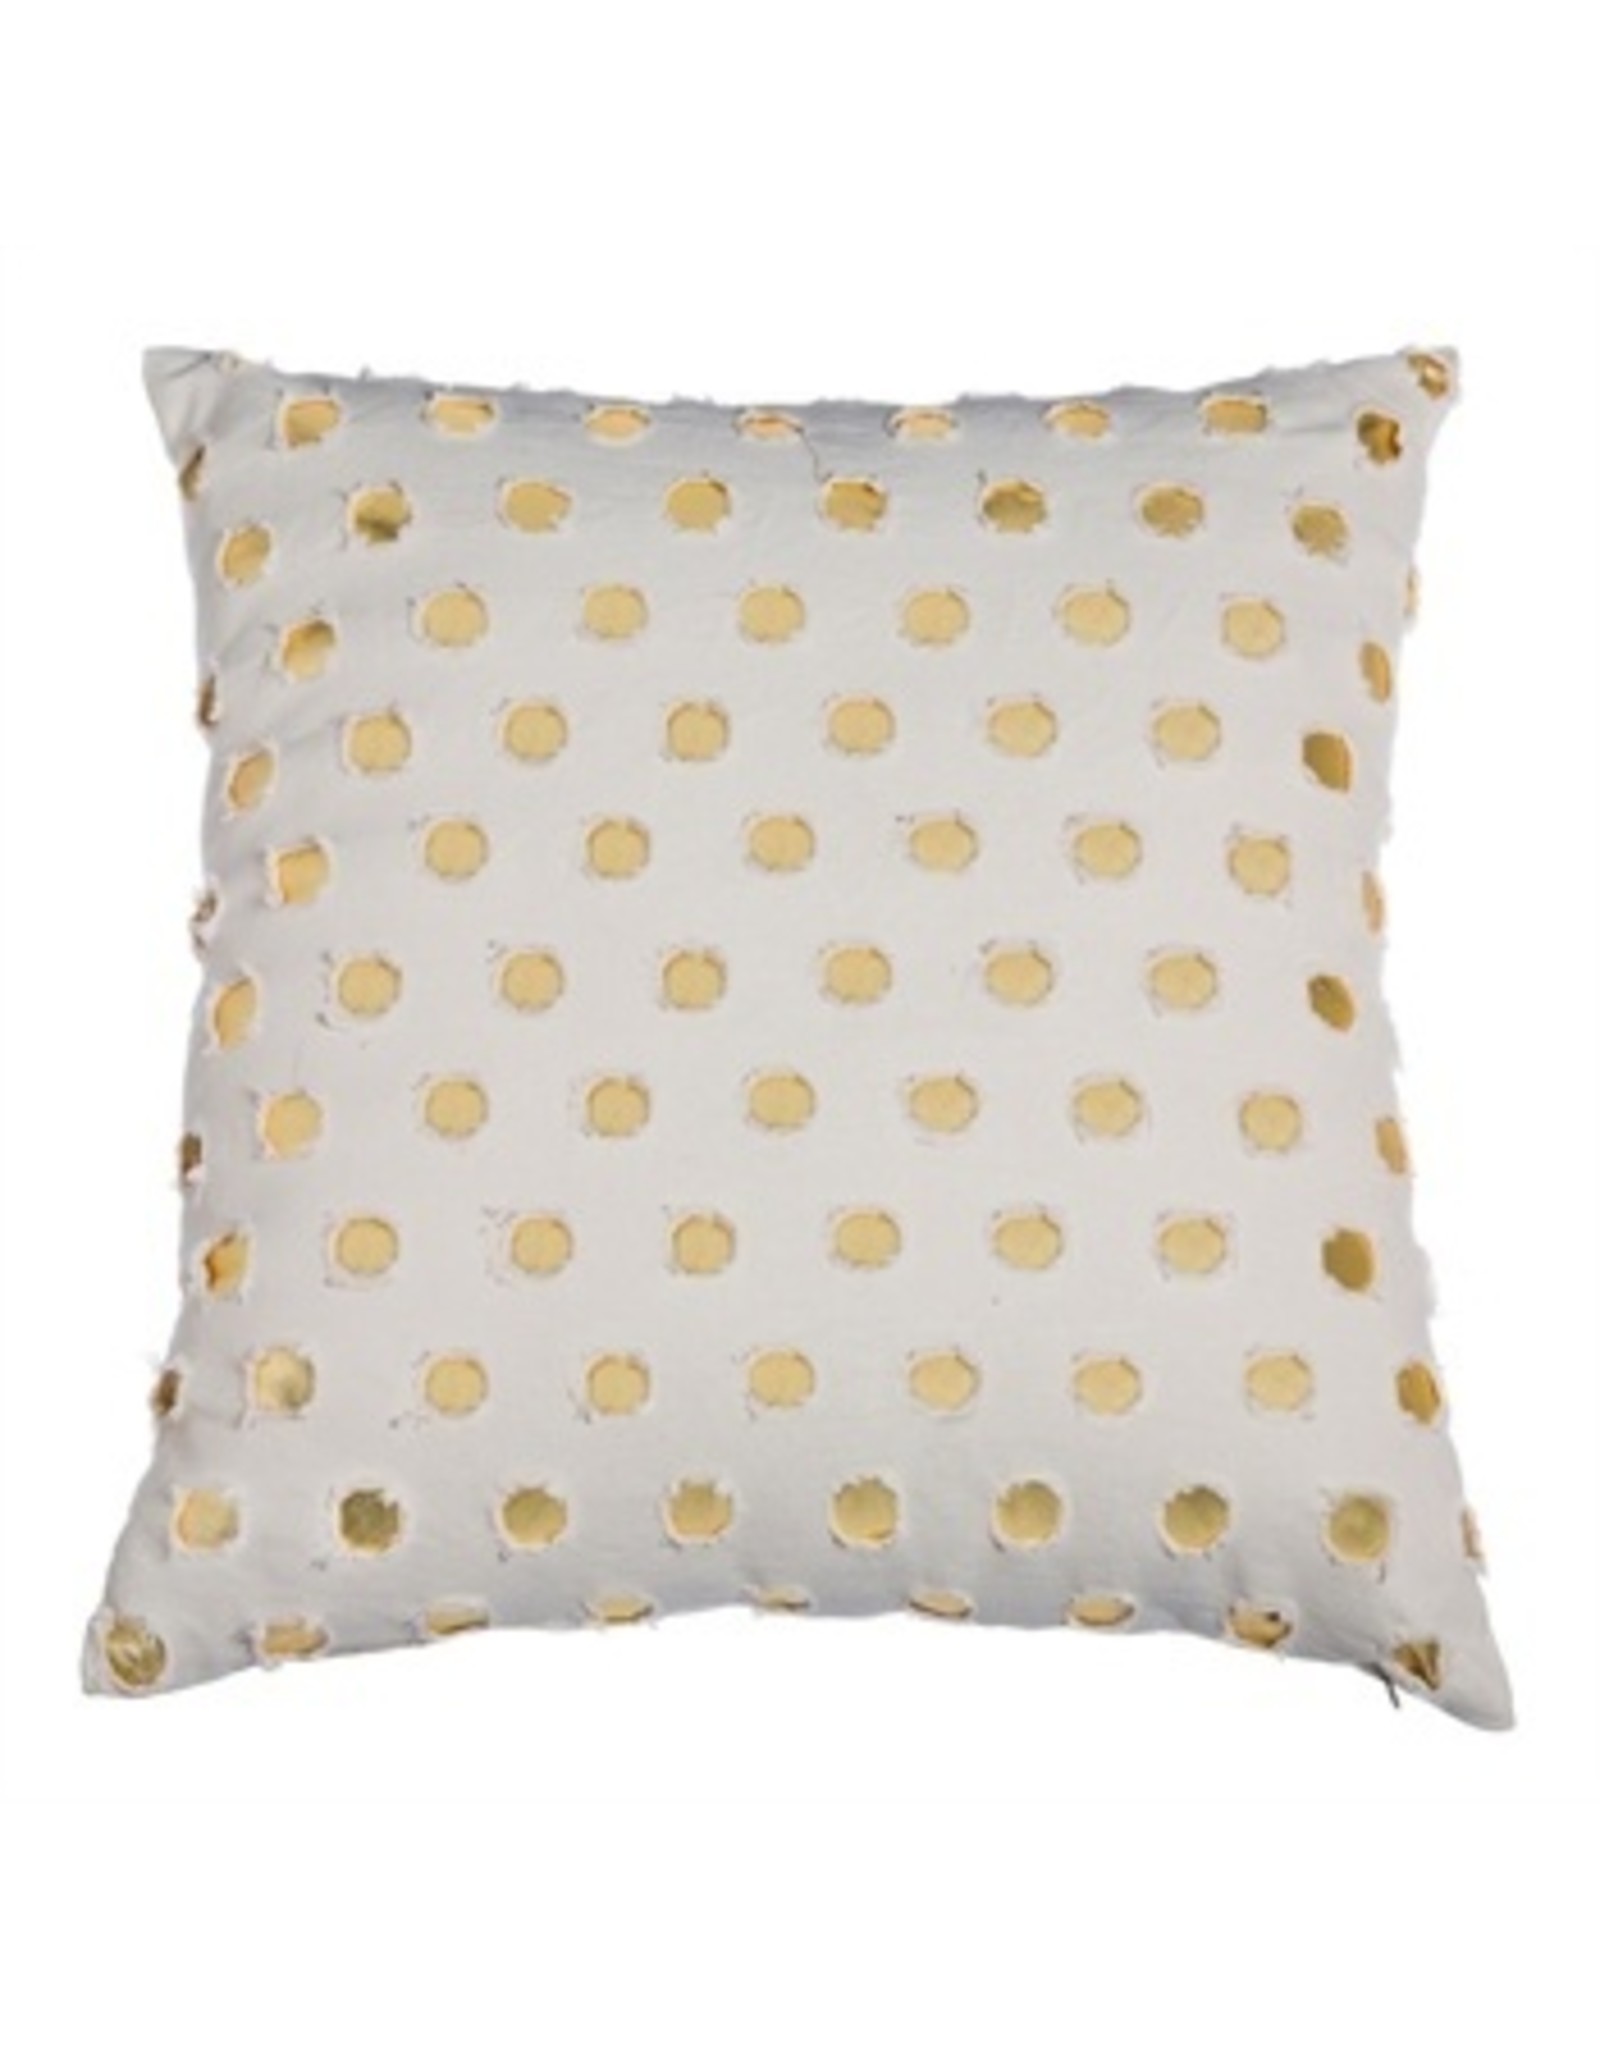 Evergreen Enterprises Gold Metallic Polka Dot Outdoor Pillow